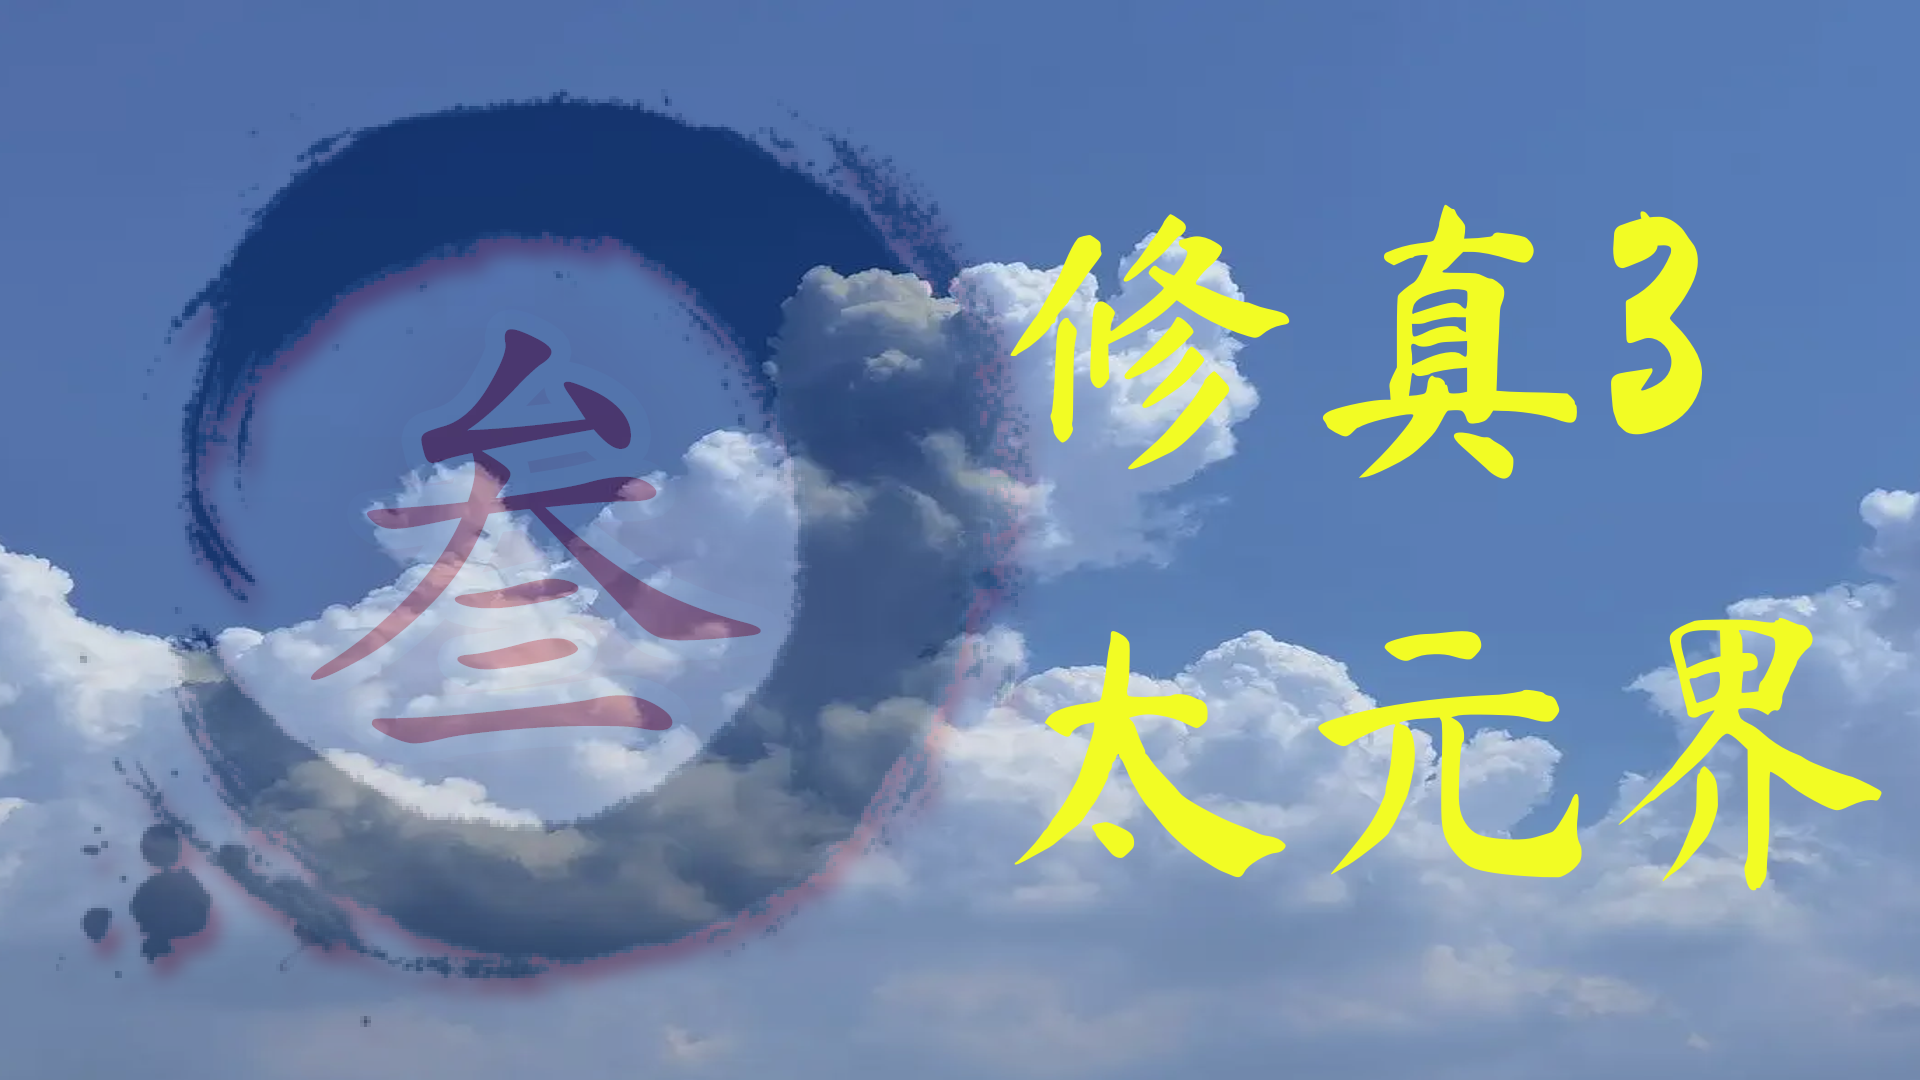 Banner of Cultivo 3 Reino de Taiyuan 1.68